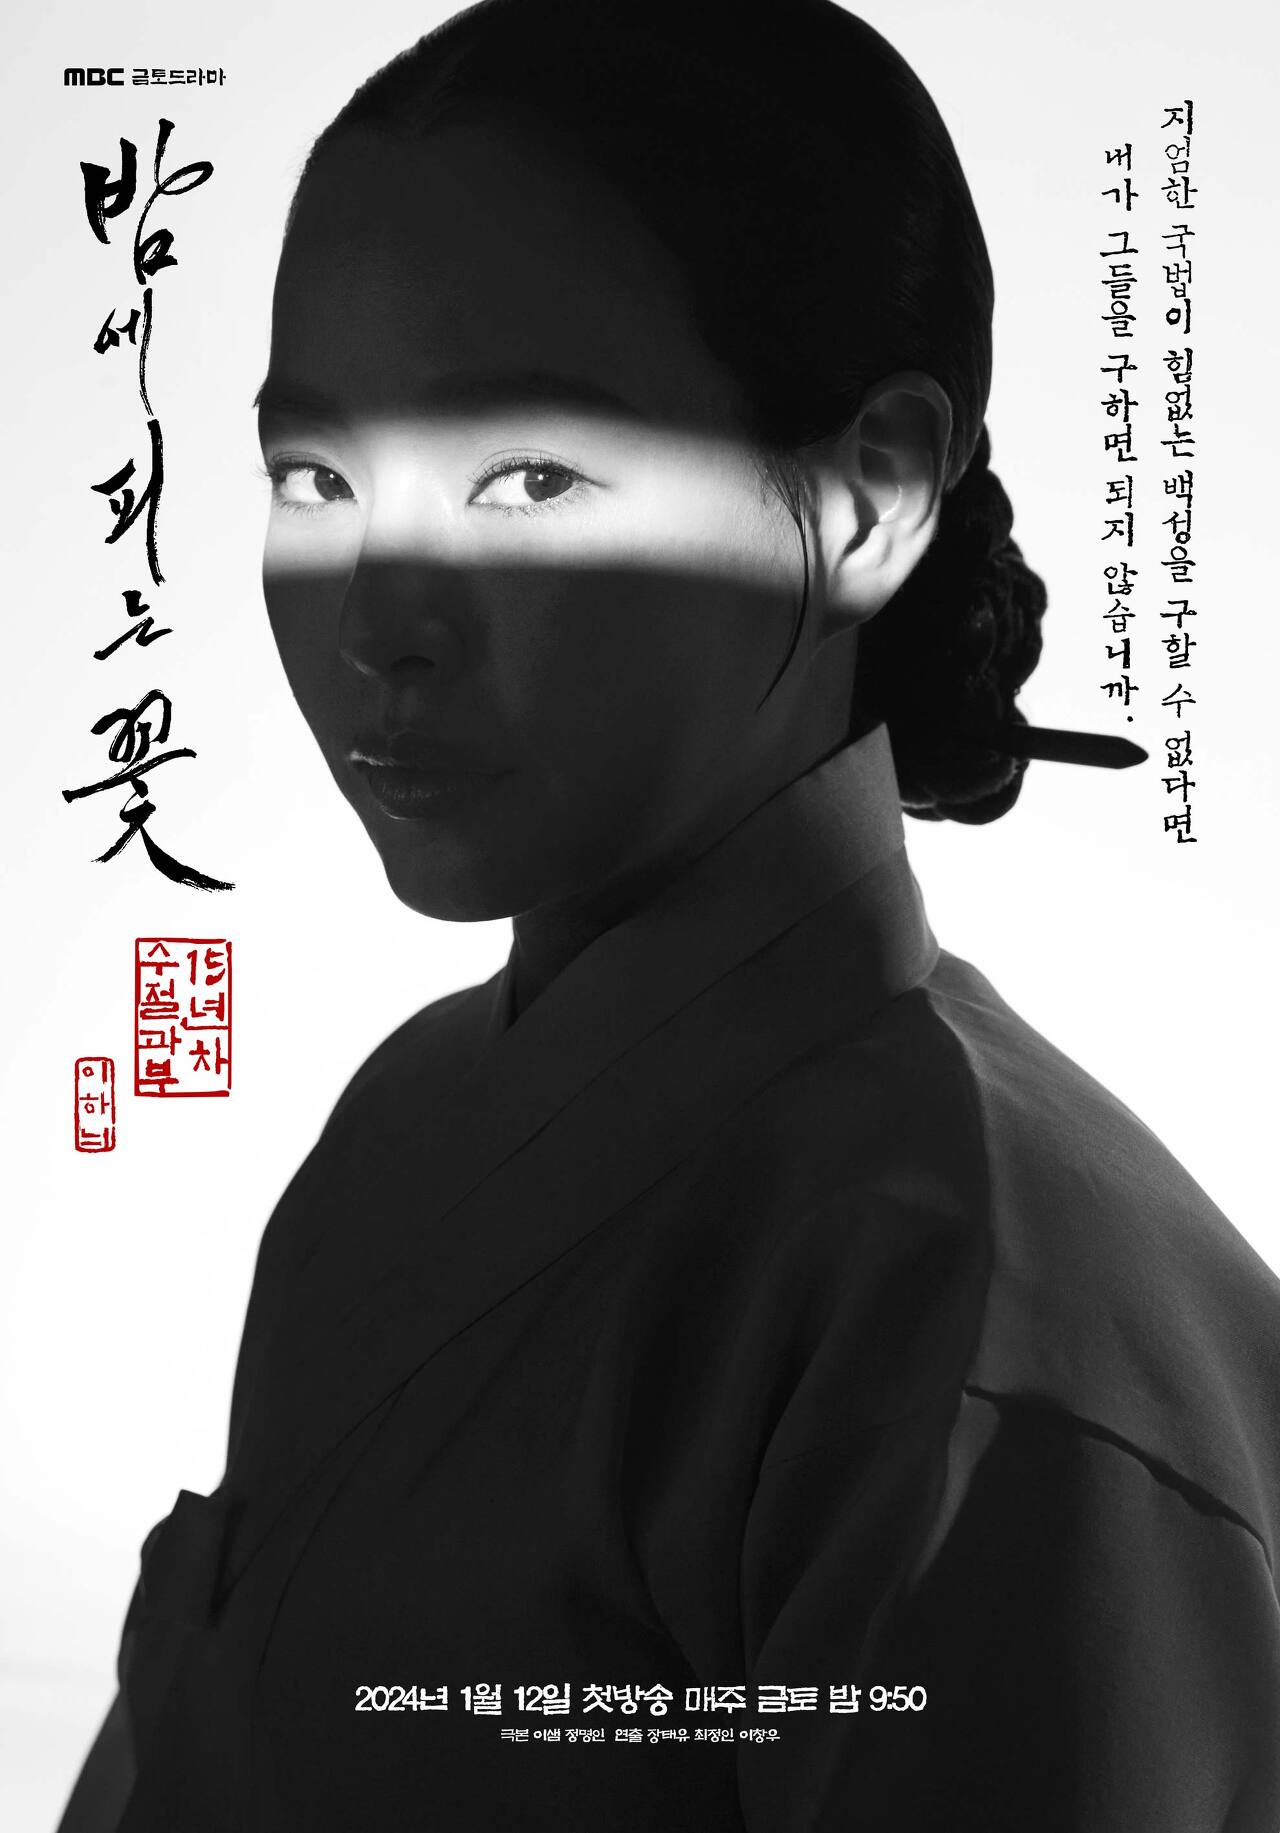 MBC 드라마 밤에 피는 꽃 포스터